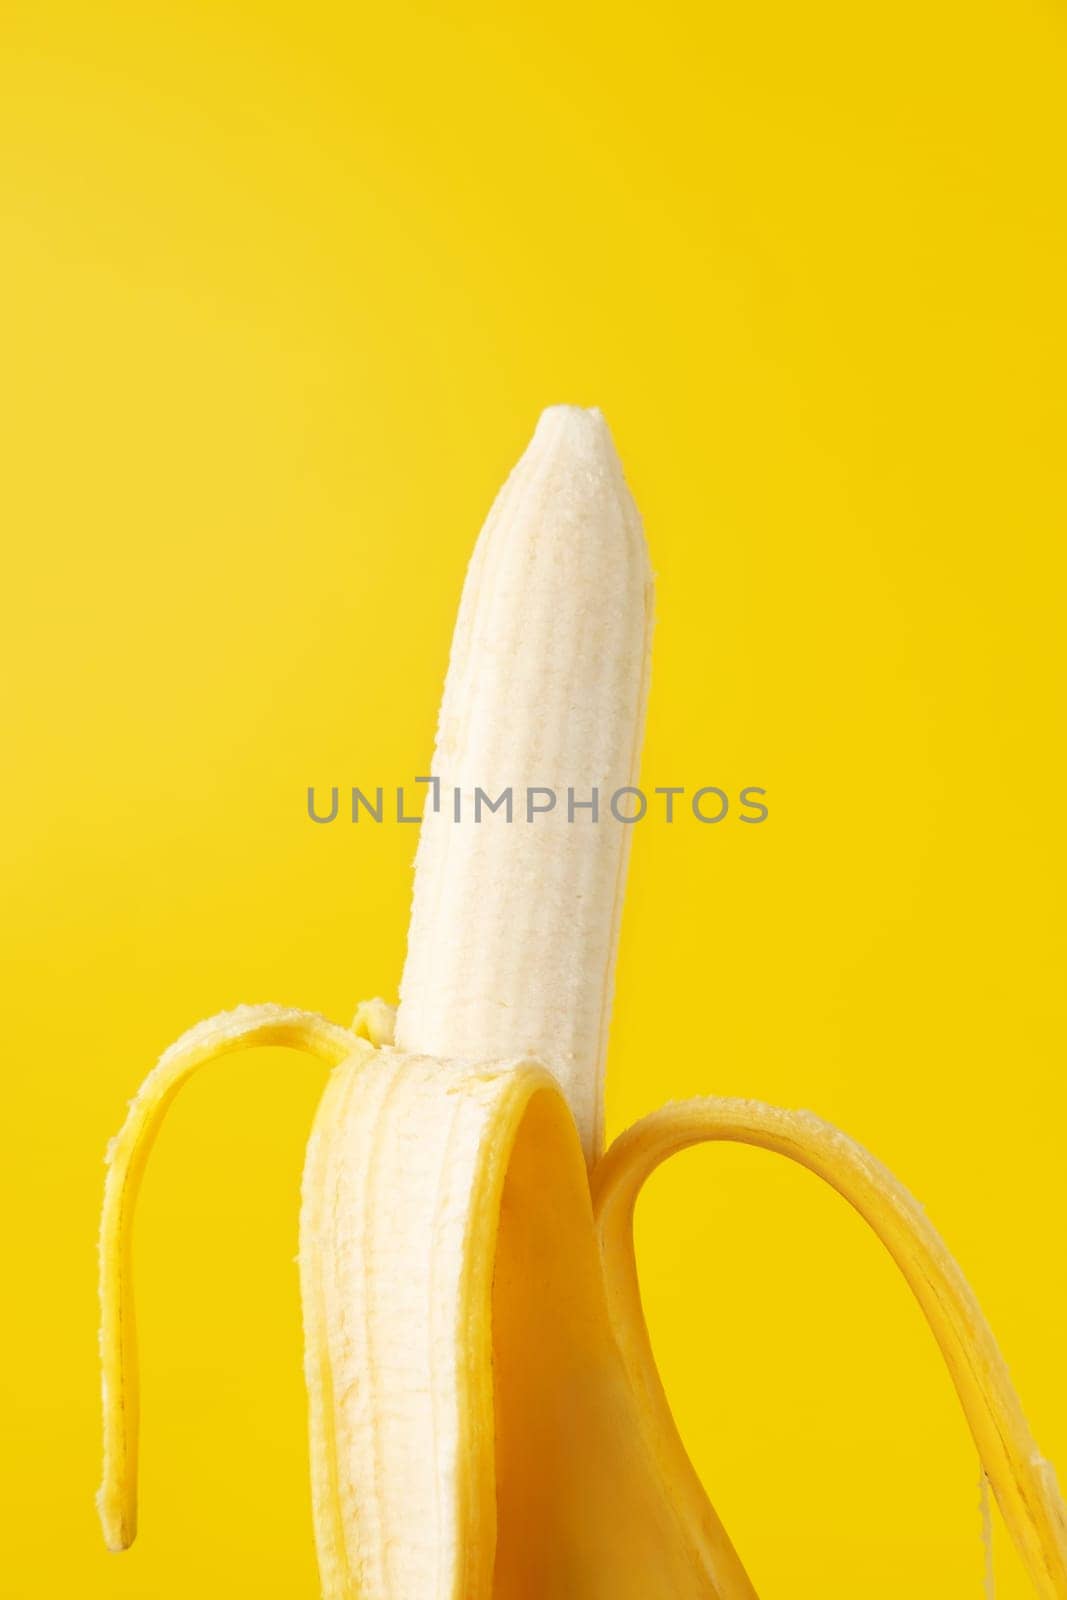 Peeled banana isolated on yellow background.